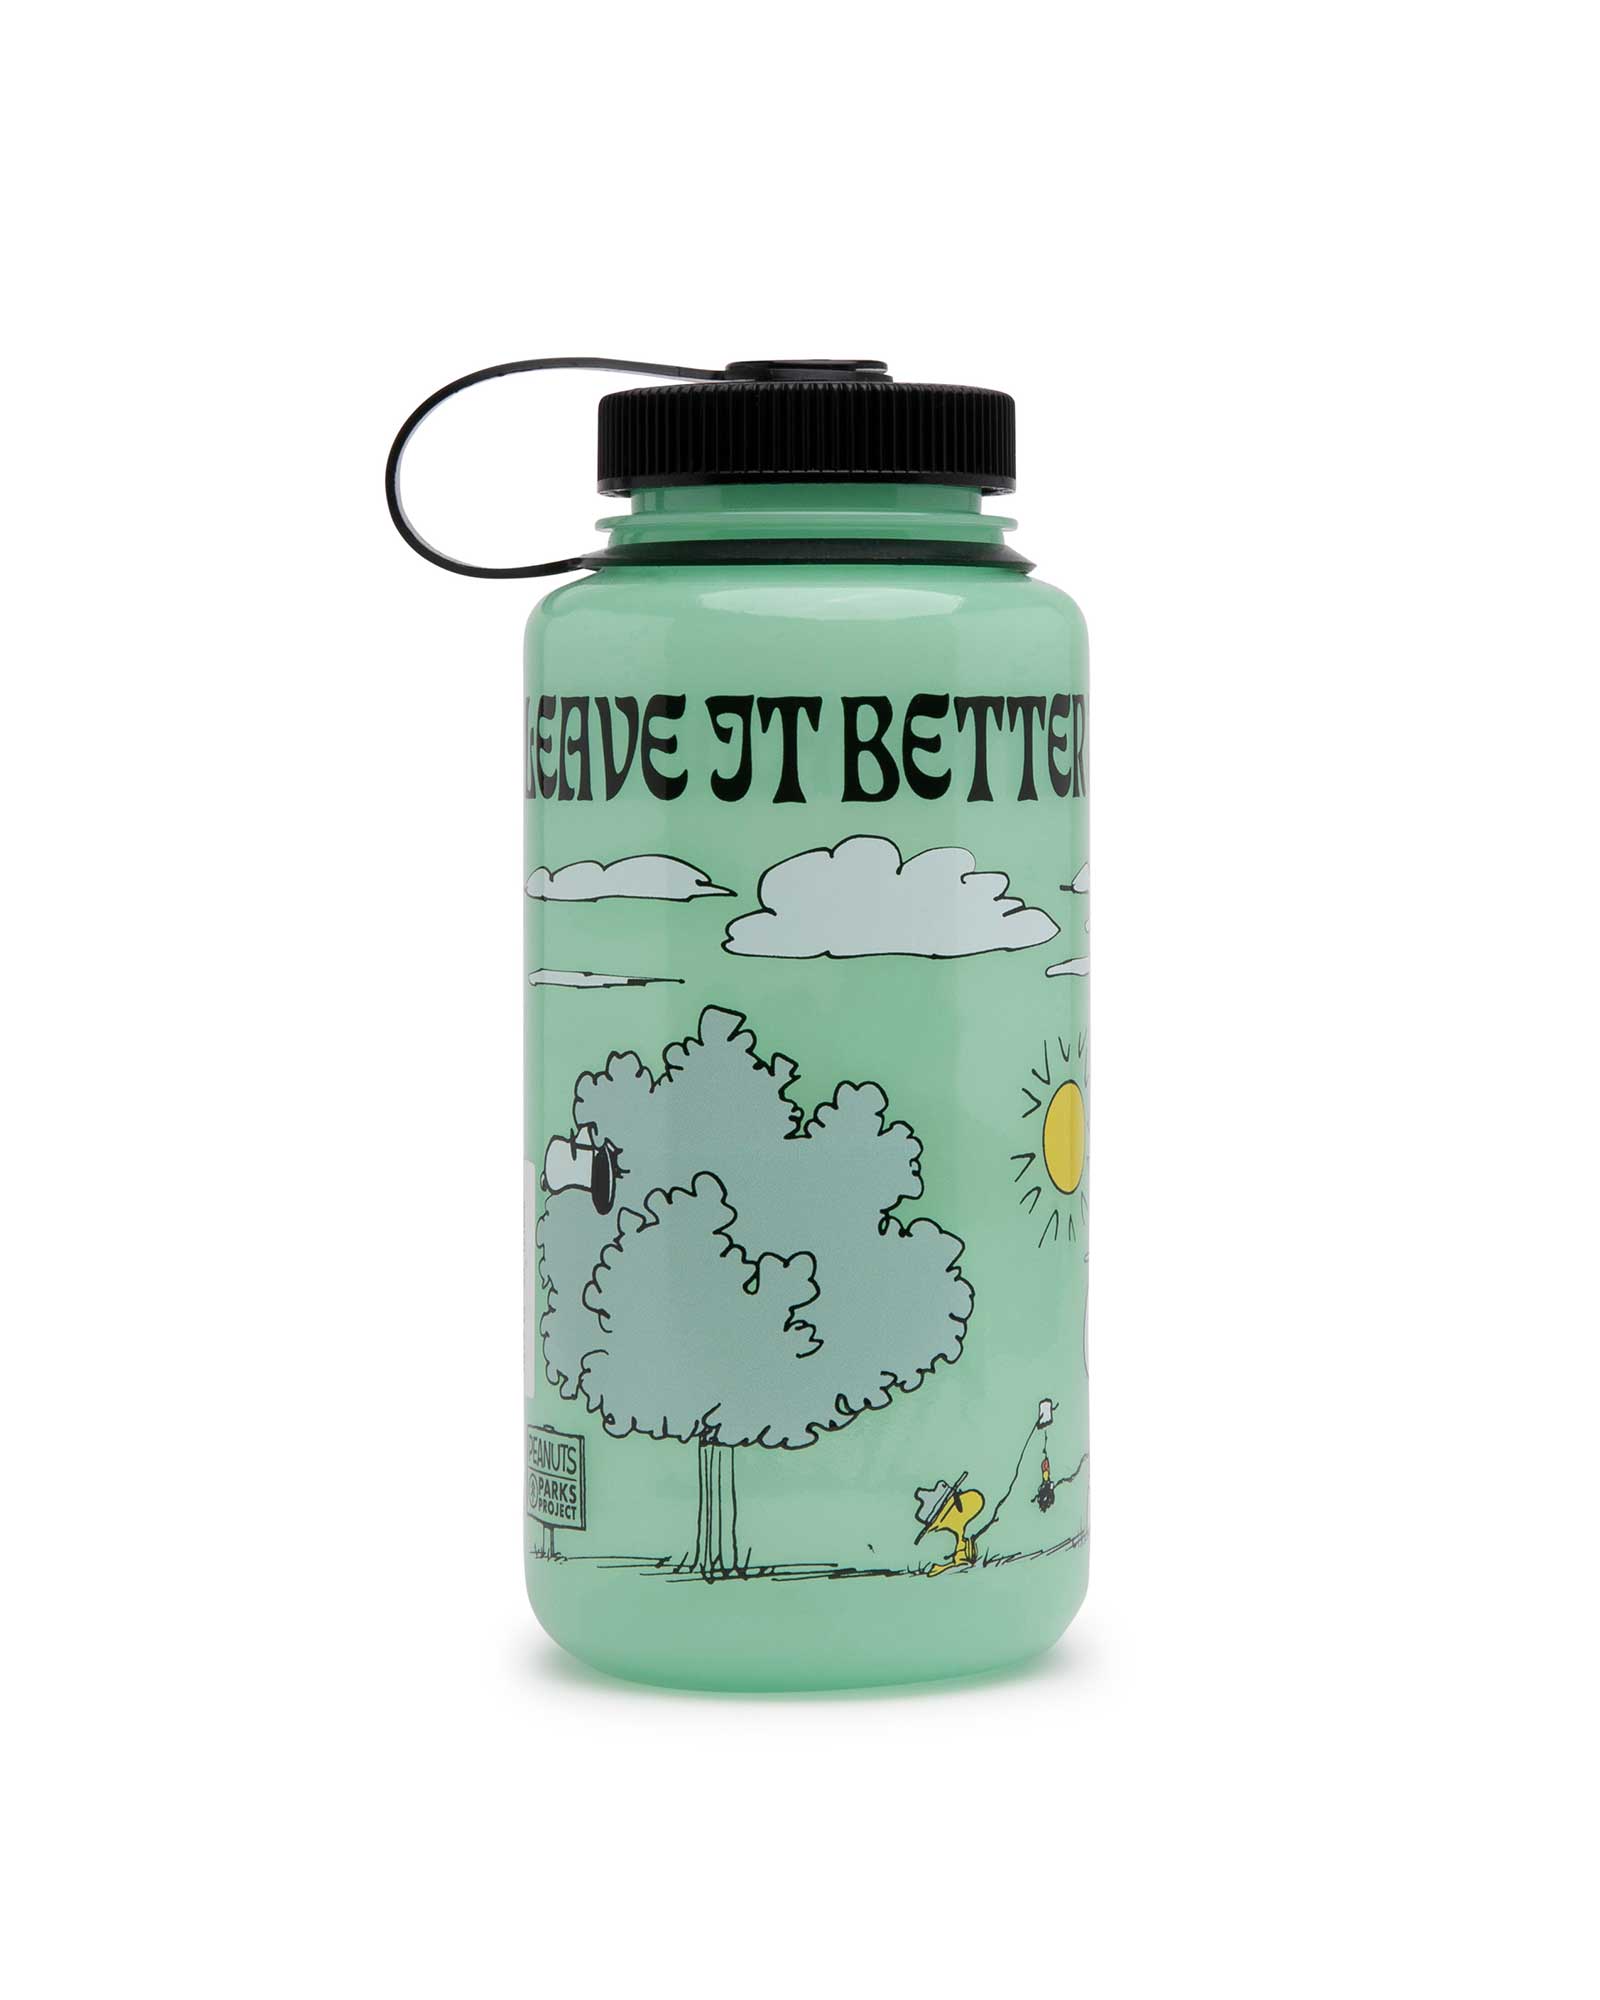 Water Bottle Stanley | Sticker